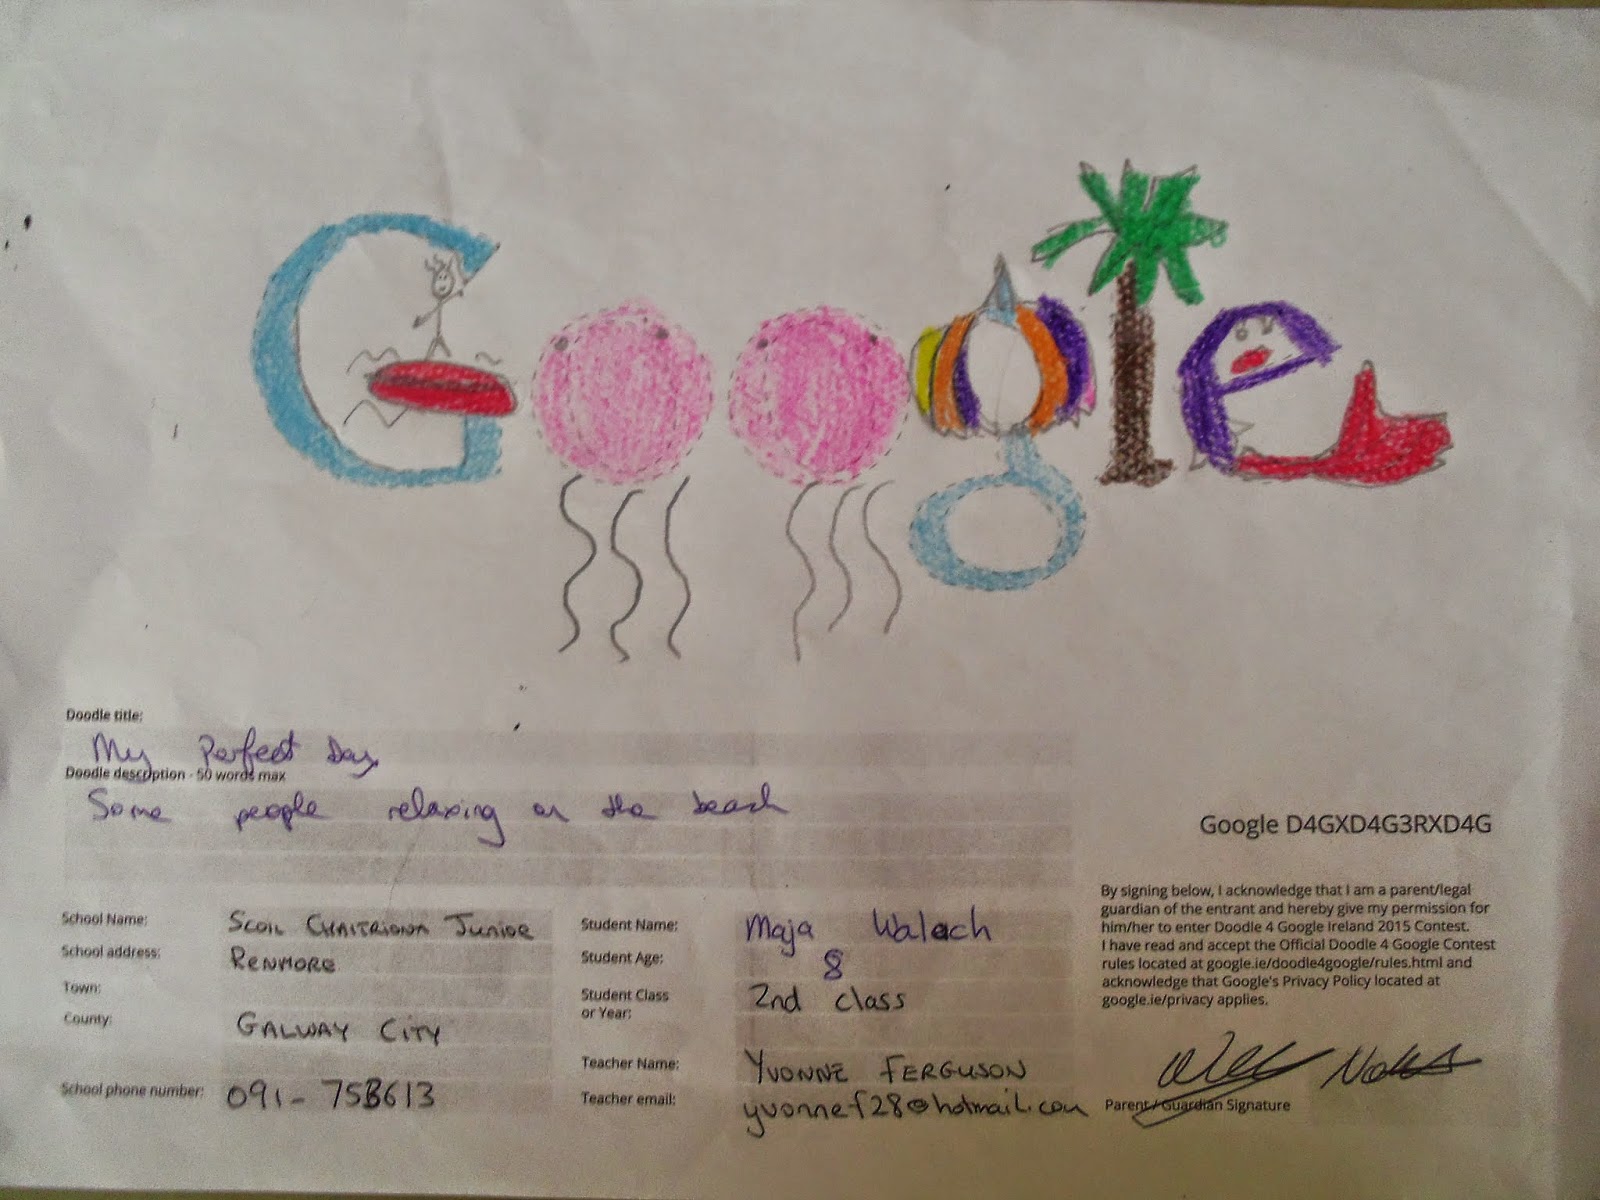 Google 4 класс. “Google Doodle Chinese New year 2013” змейка. Дудл от гугл Burning. Гугл дудл примеры. Гугл дудл толстой.